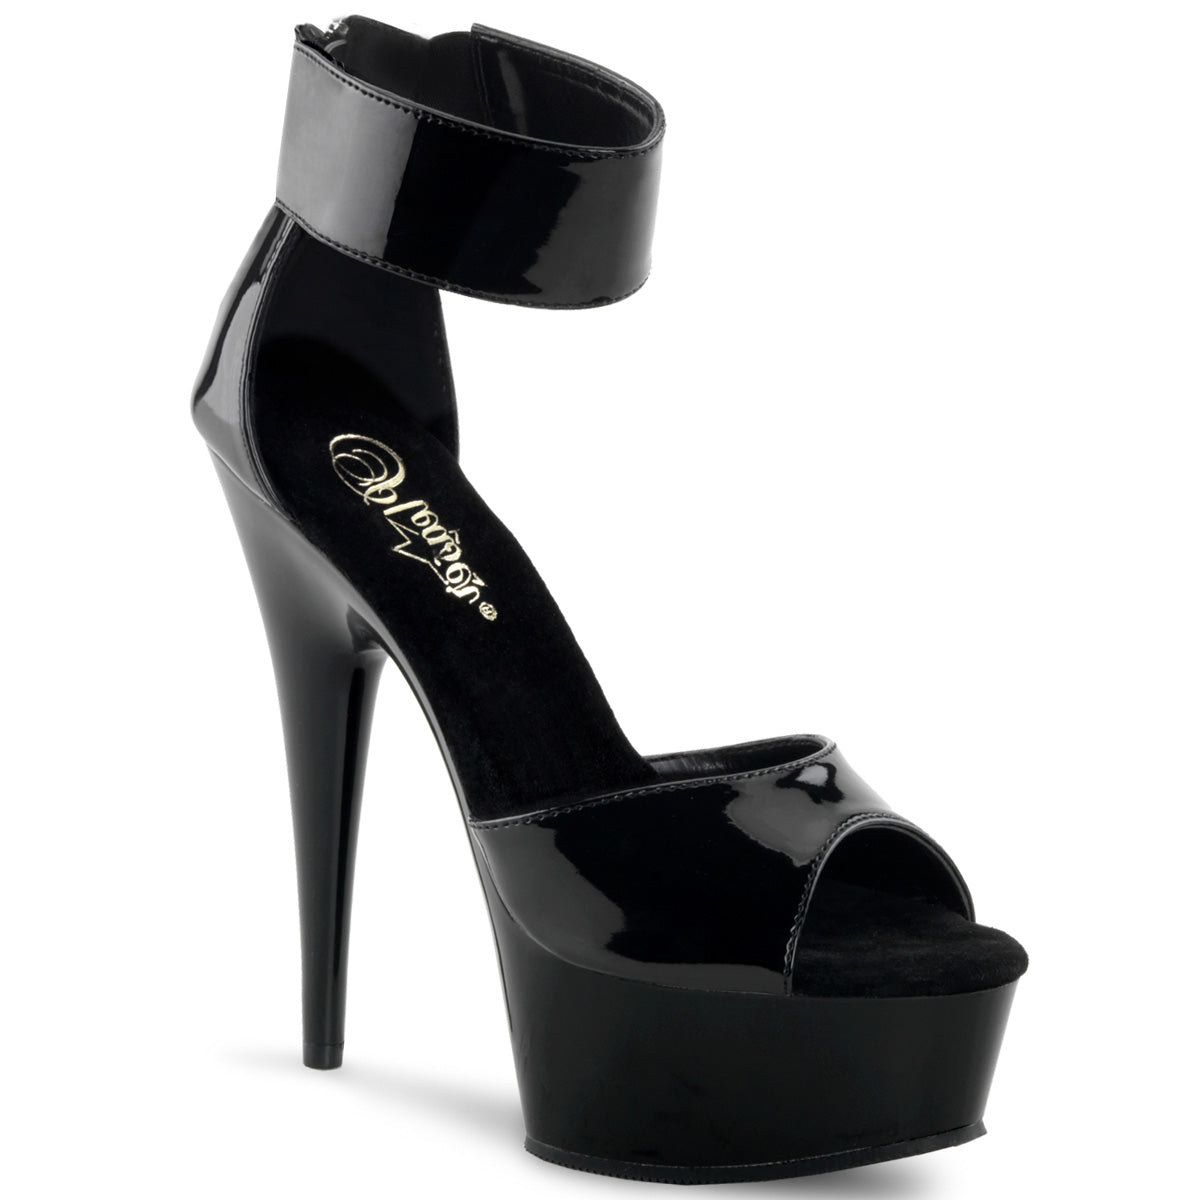 DELIGHT-670-3 Pleaser 6" Heel Black Pole Dancing Platforms-Pleaser- Sexy Shoes